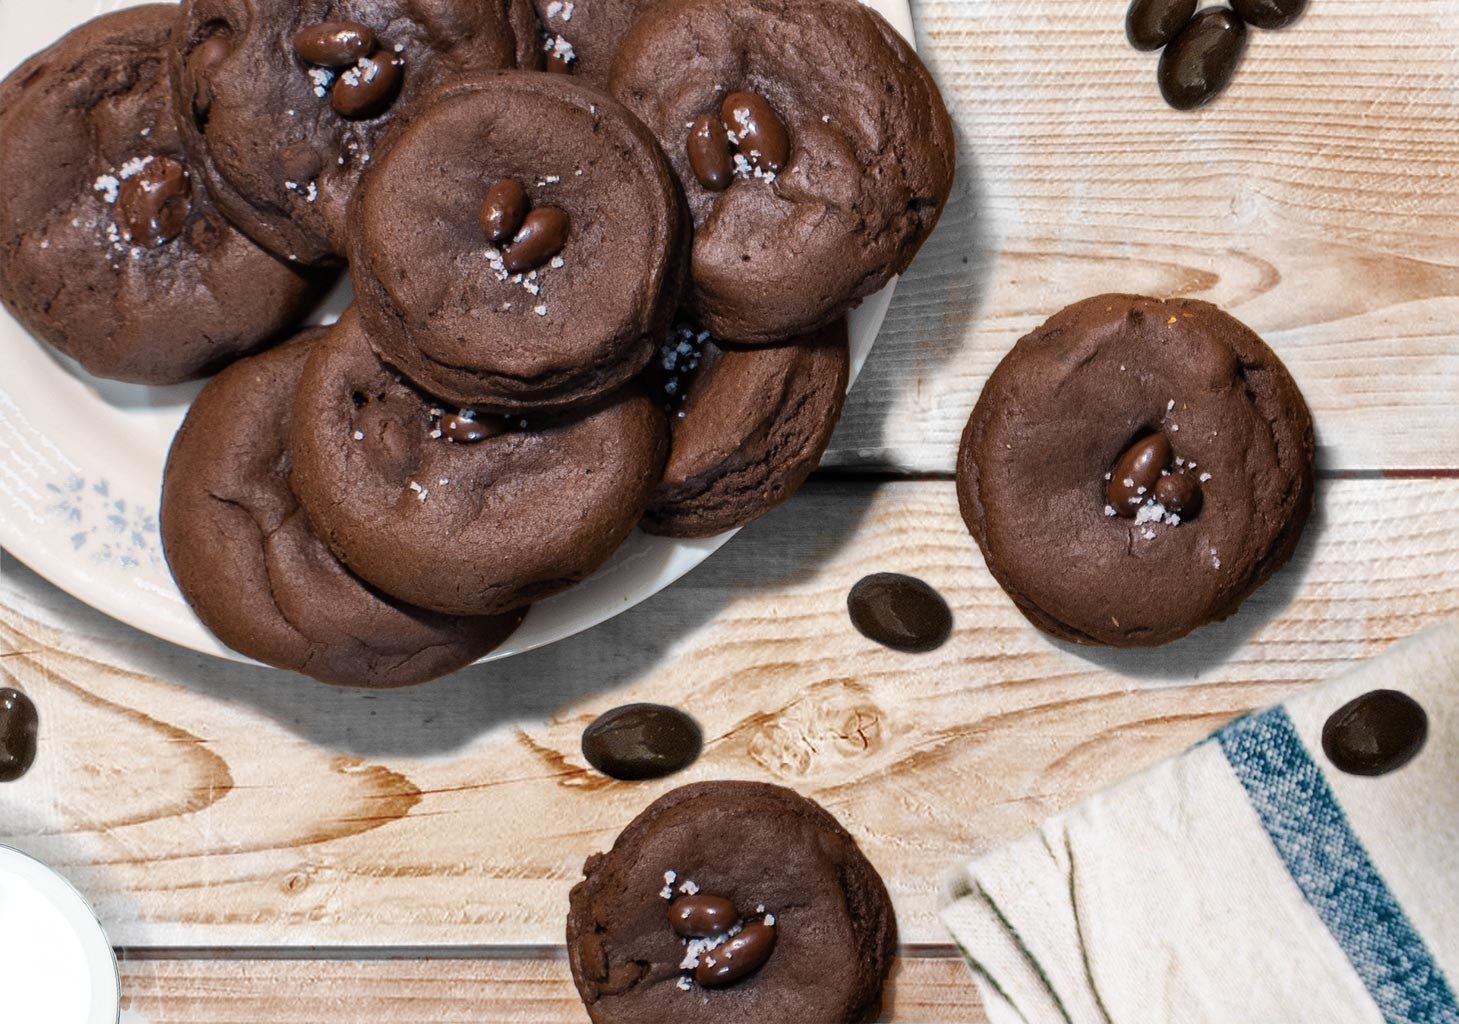 Israeli Olive Oil and Chocolate Espresso Cookies